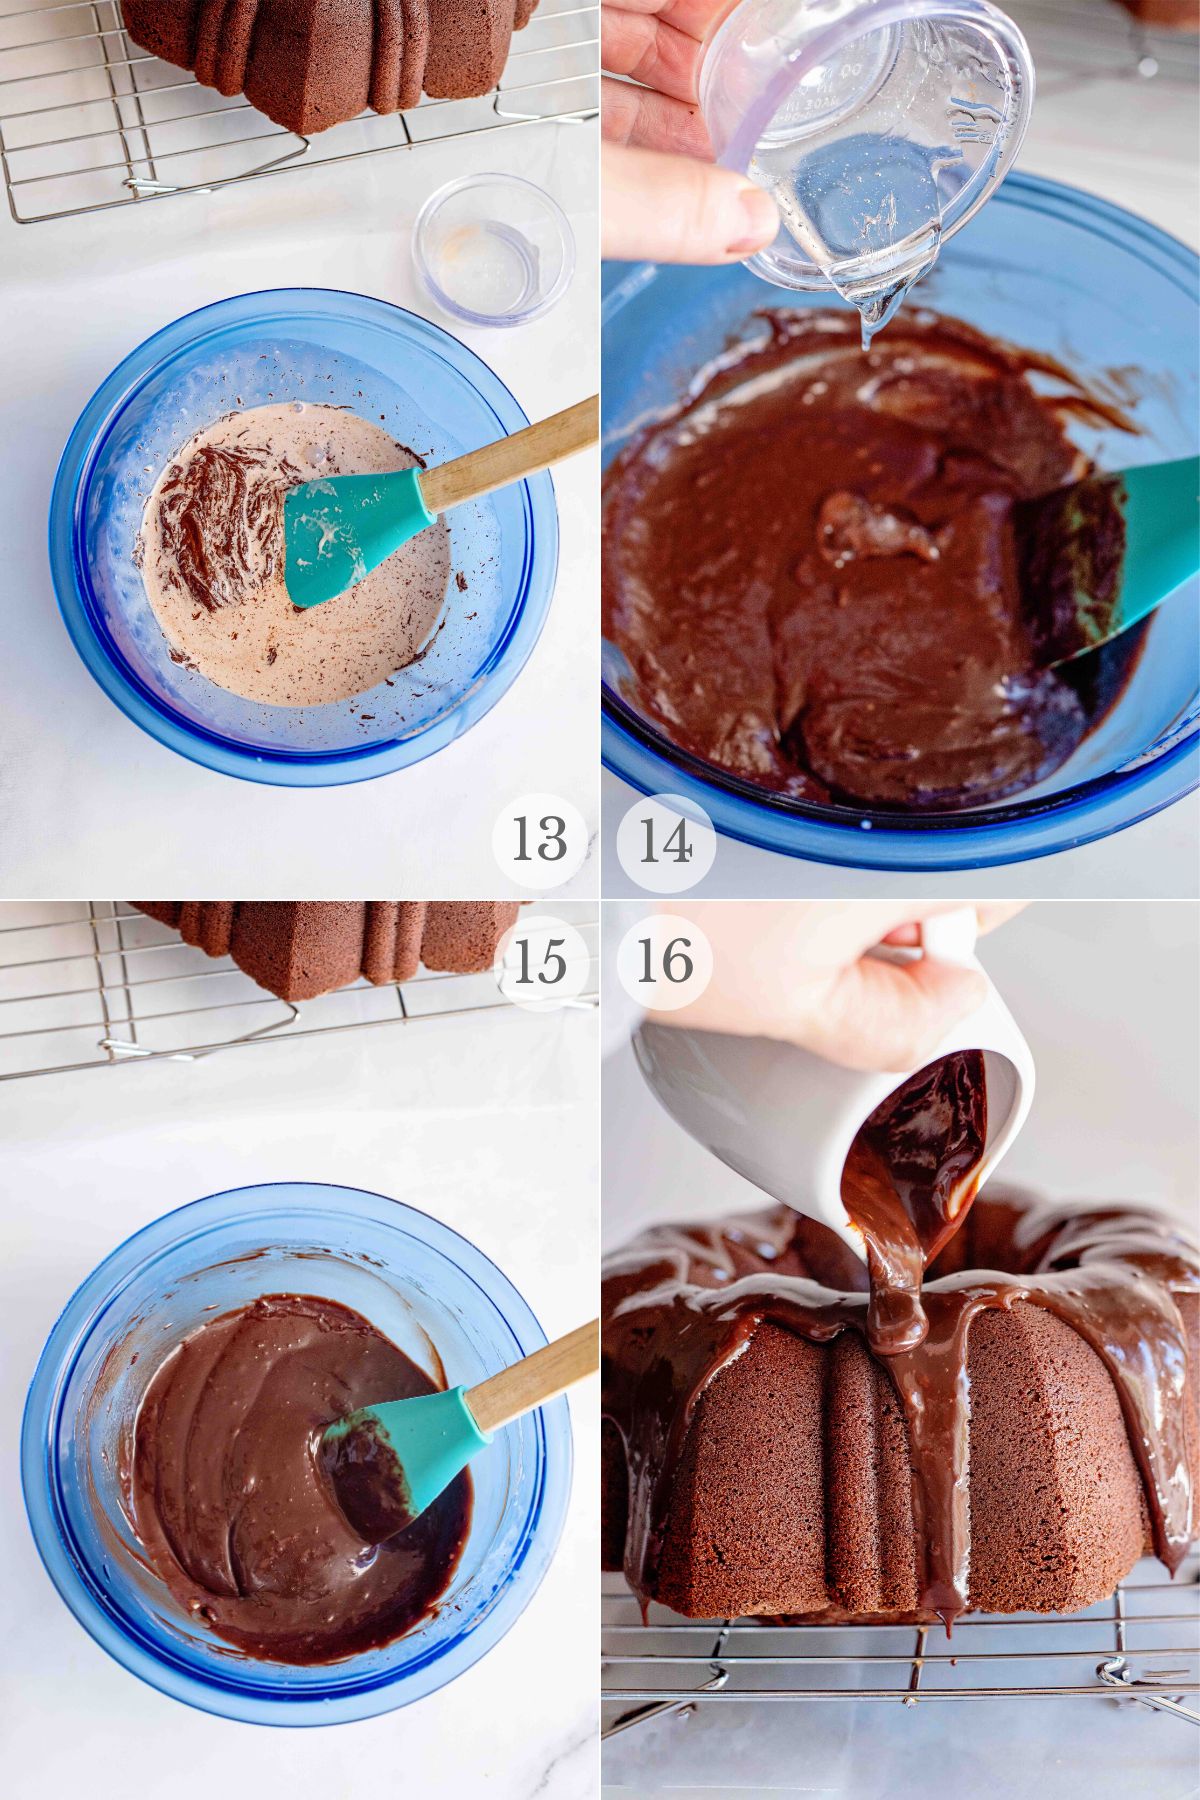 chocolate pound cake recipe steps 13-16.